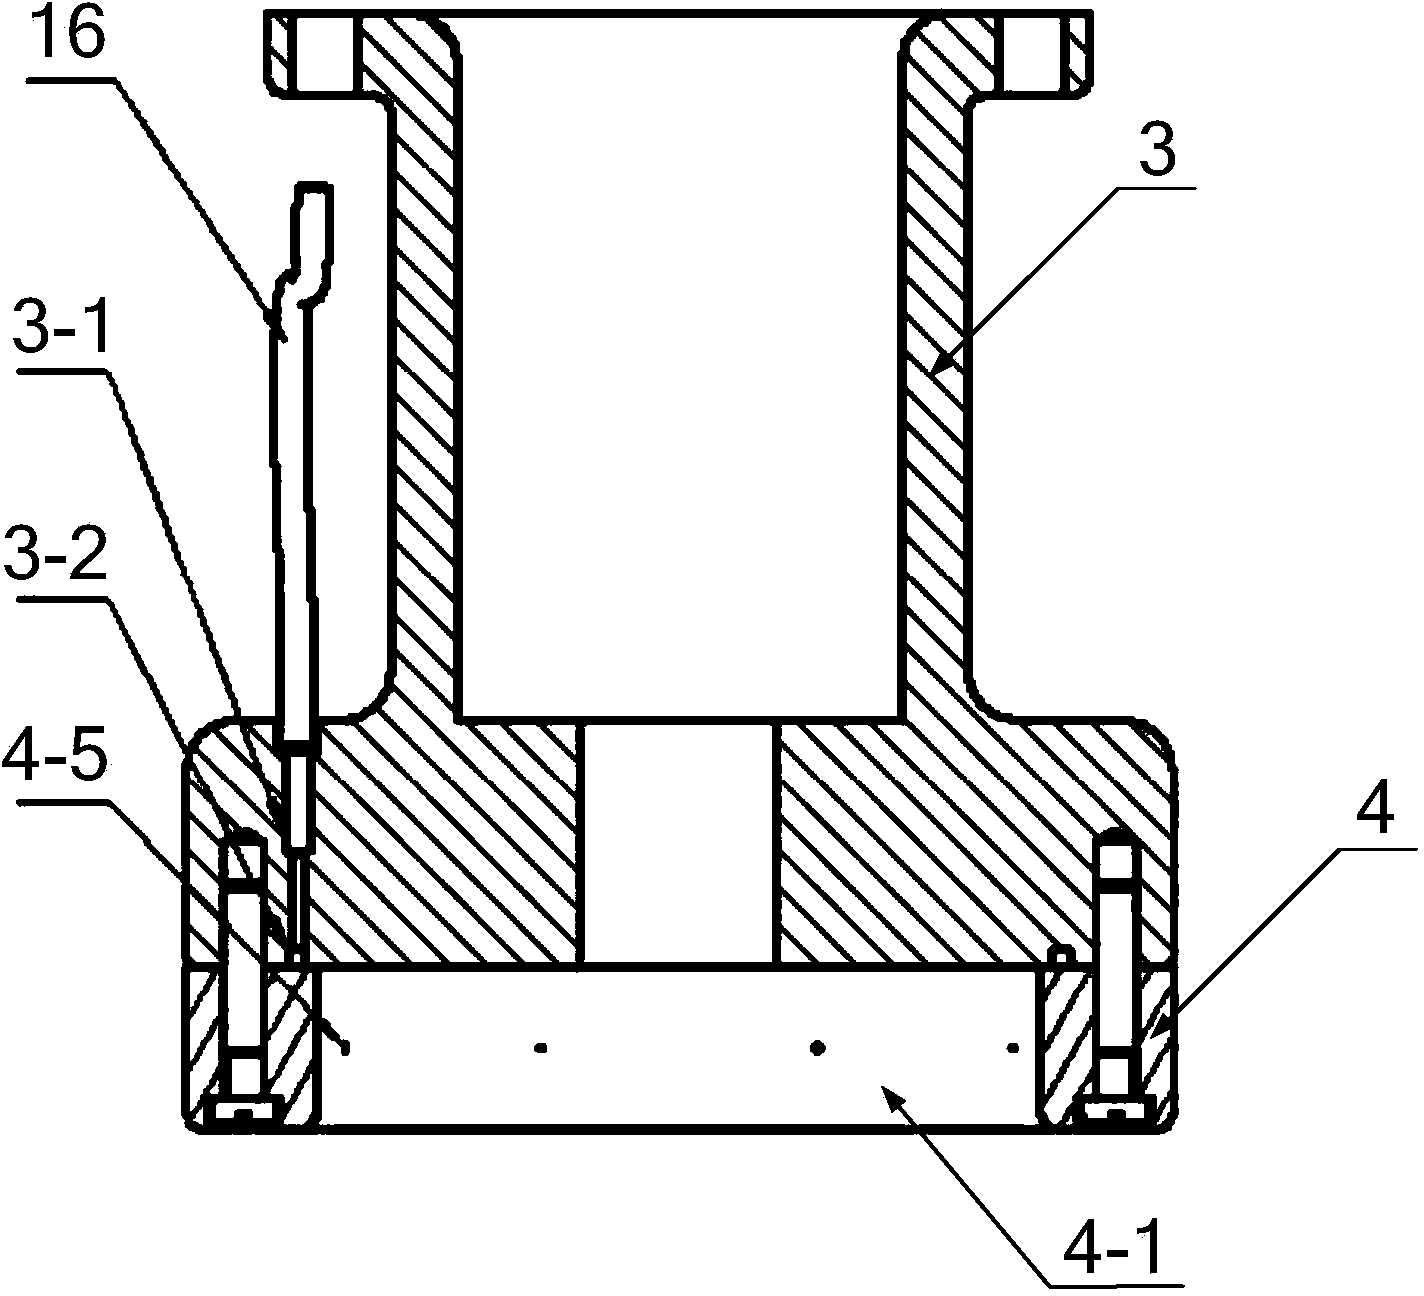 Pneumatic device for measuring internal diameter and external diameter of thin-wall bearing ring